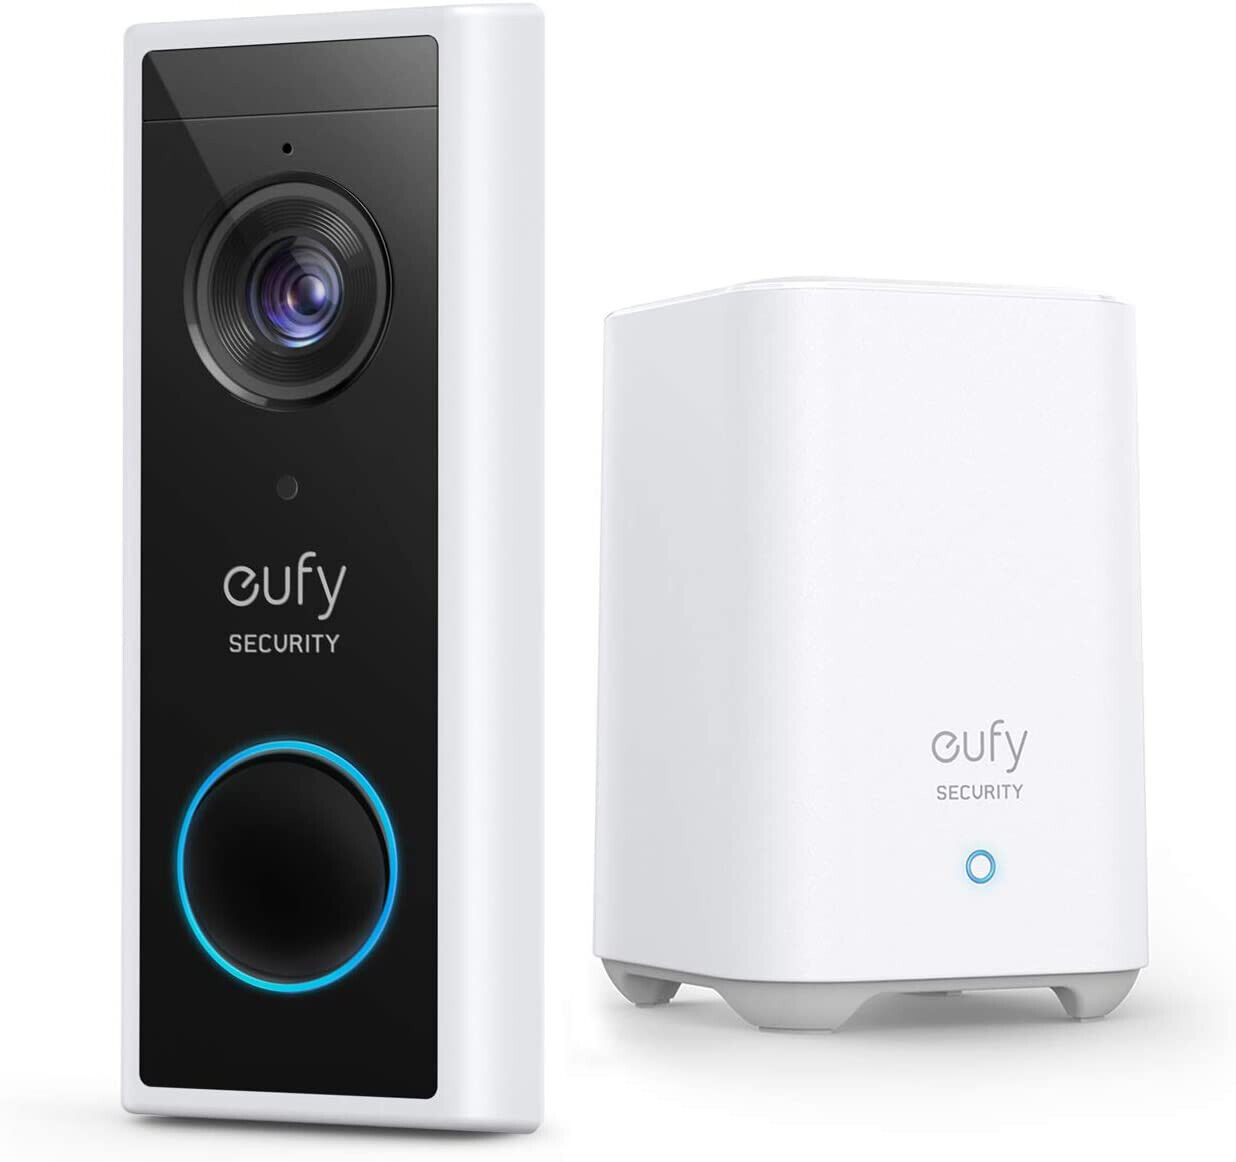 eufy security video doorbell battery powered kit 2k resolution